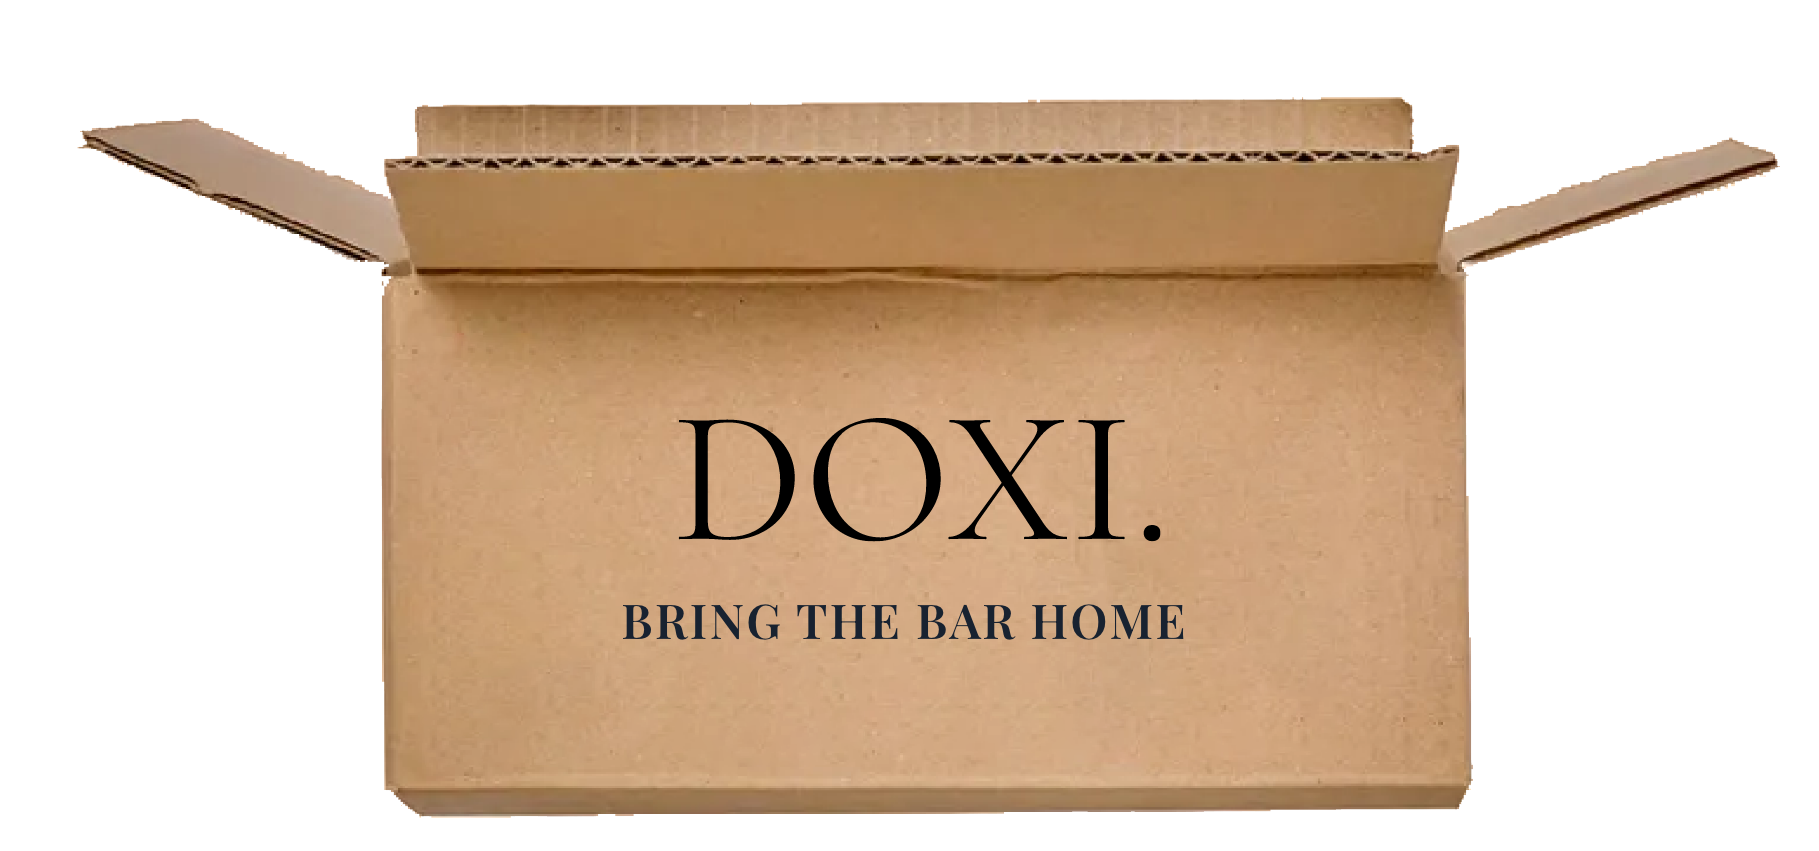 Doxi branded cardboard box